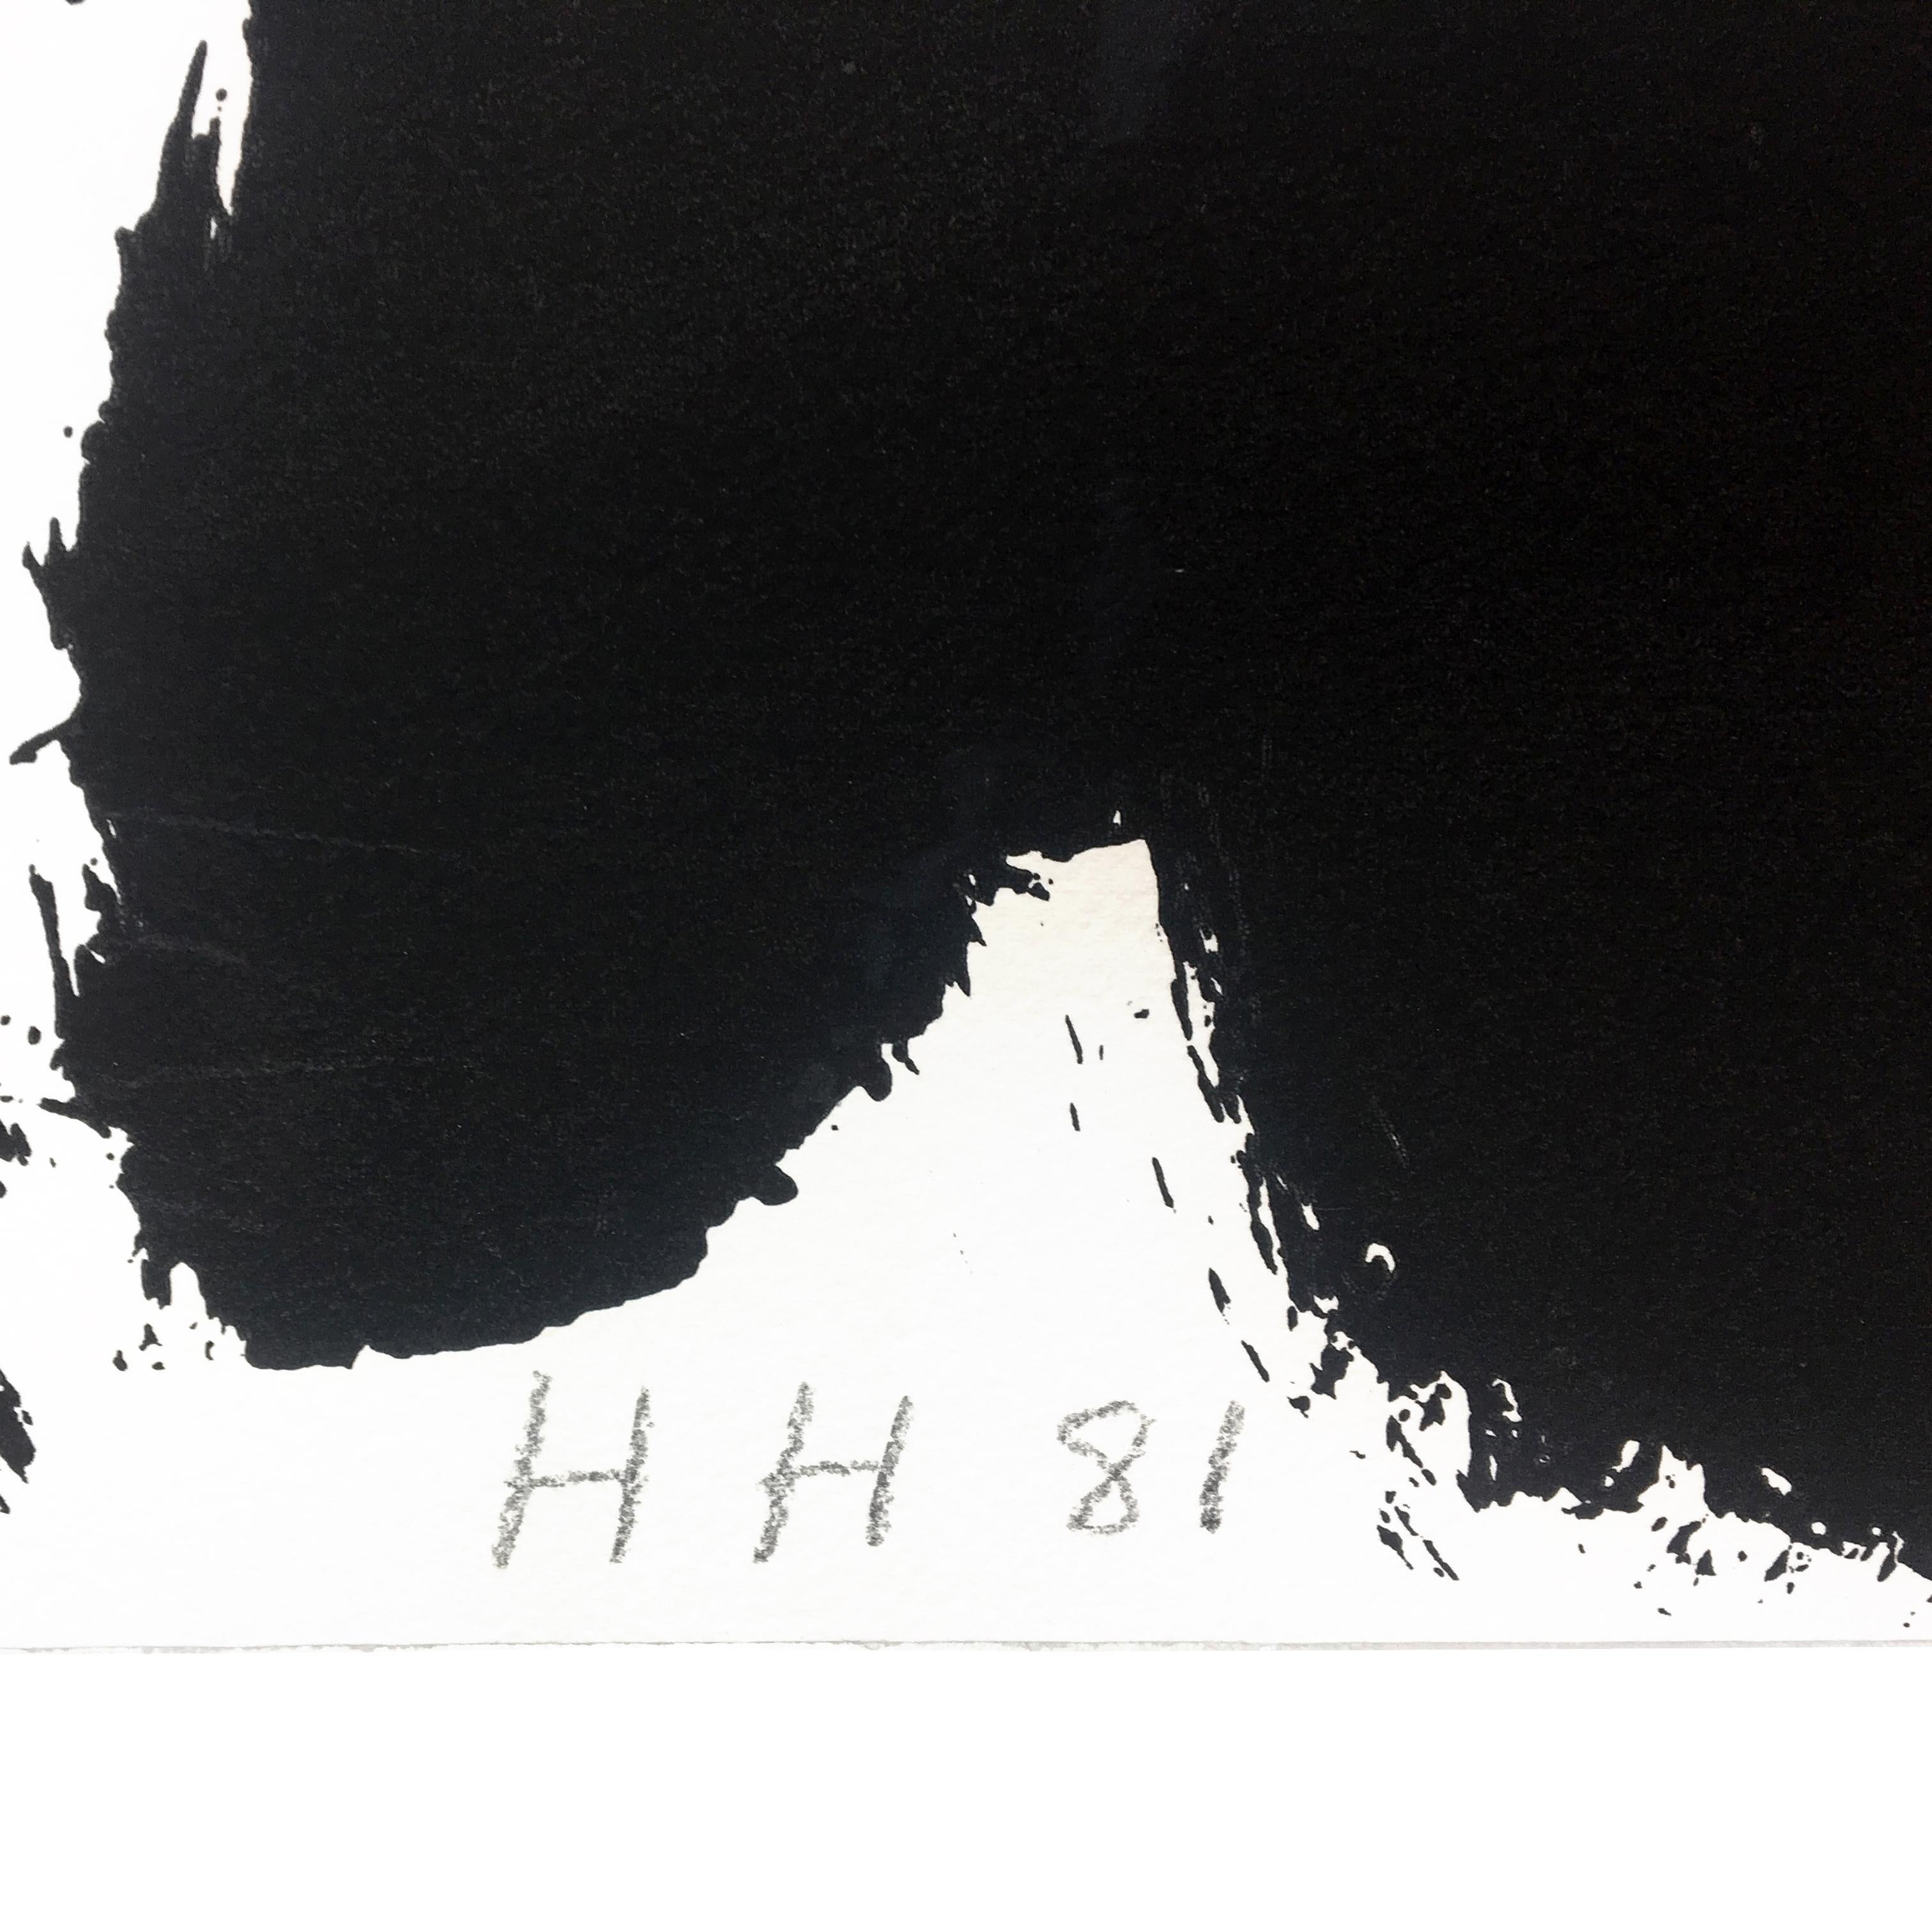 Souvenir, Howard Hodgkin: large scale black white gray abstract interior scene  1